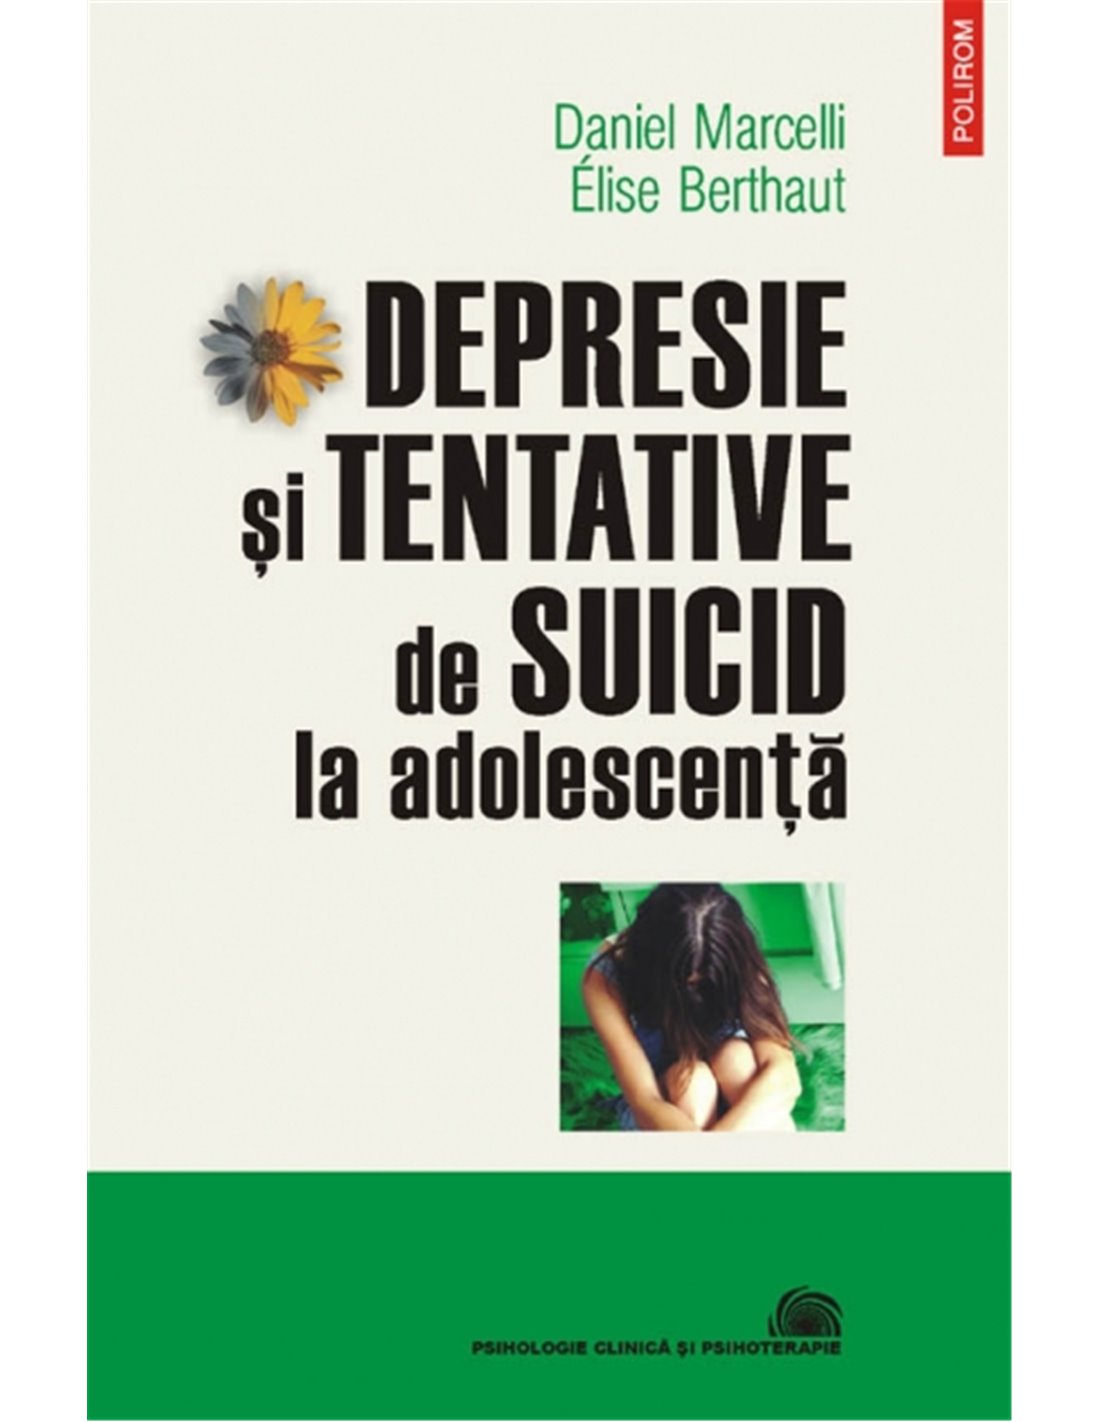 Depresie si tentative de suicid la adolescenta - D. Marcelli, E. Berthaut | Editura Polirom